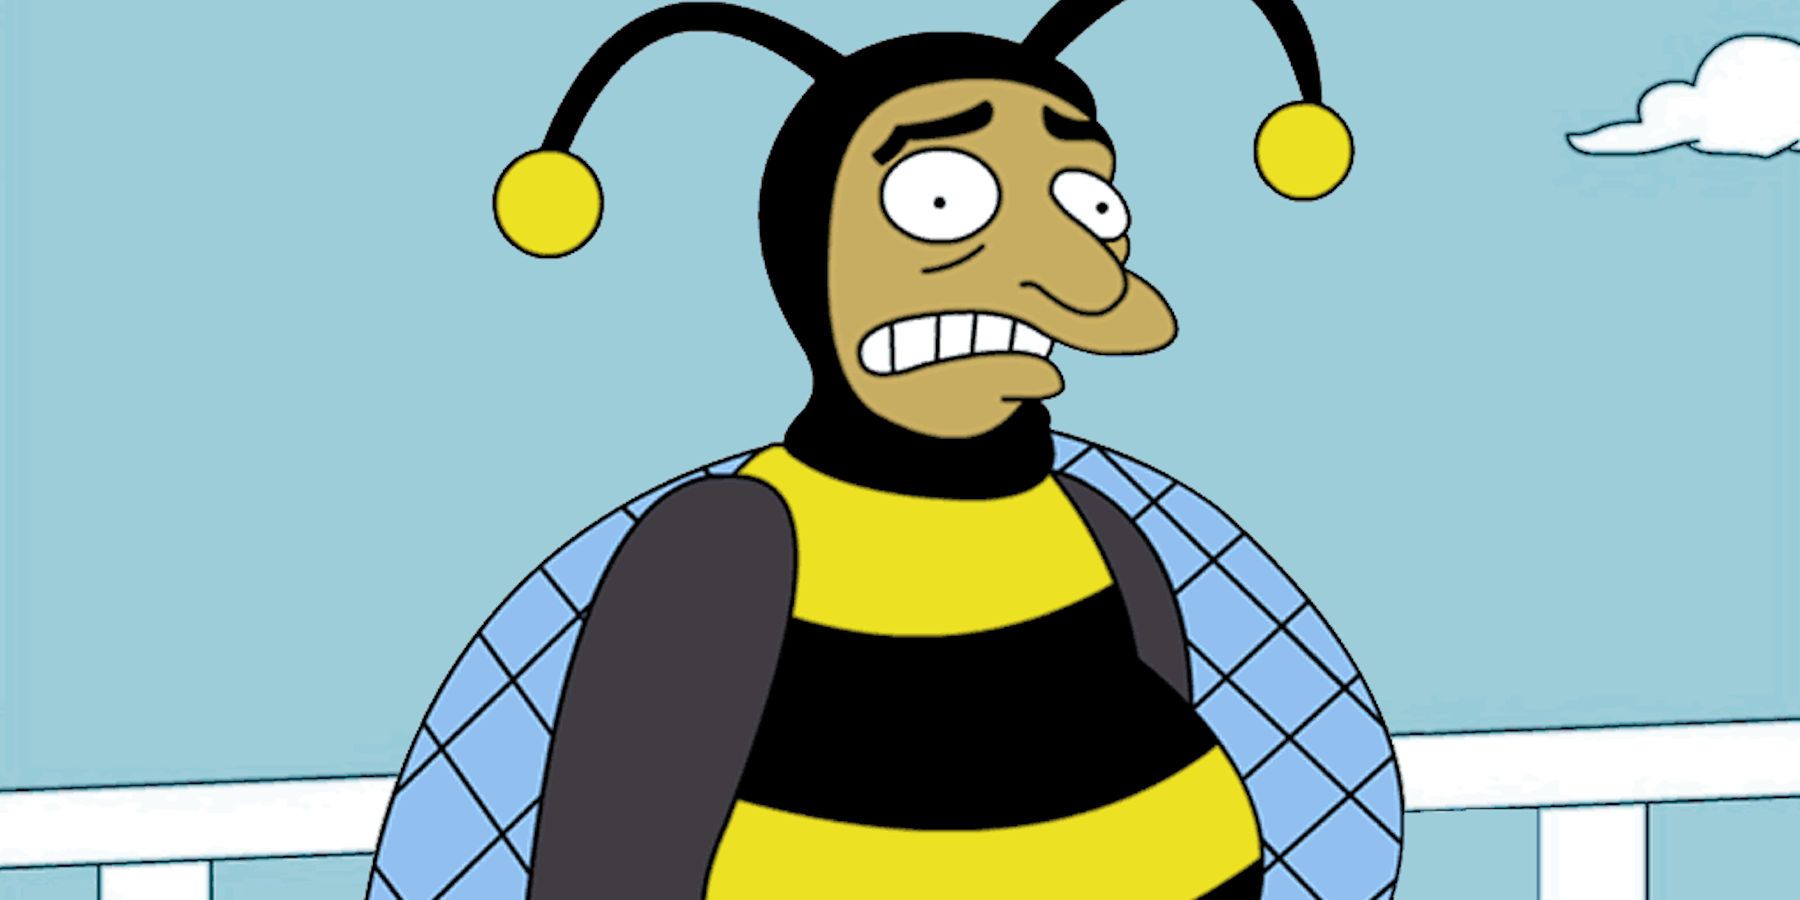 Bumblebee Man evidently upset as his antennas flop over his face